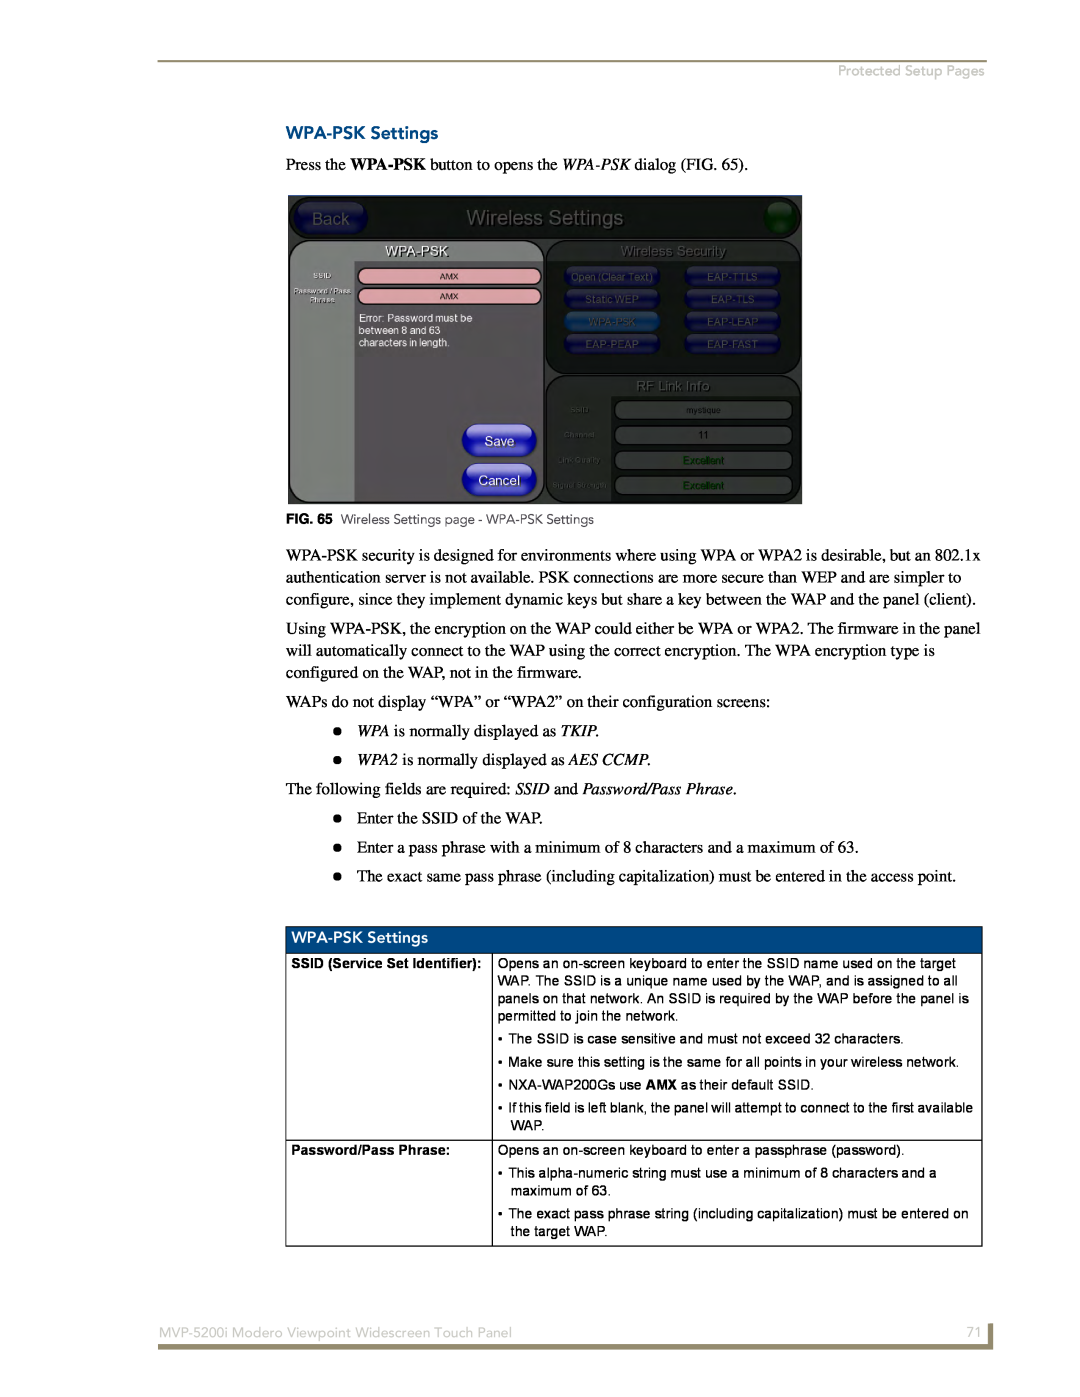 AMX MVP-5200i manual WPA-PSK Settings, Press the WPA-PSK button to opens the WPA-PSK dialog FIG 